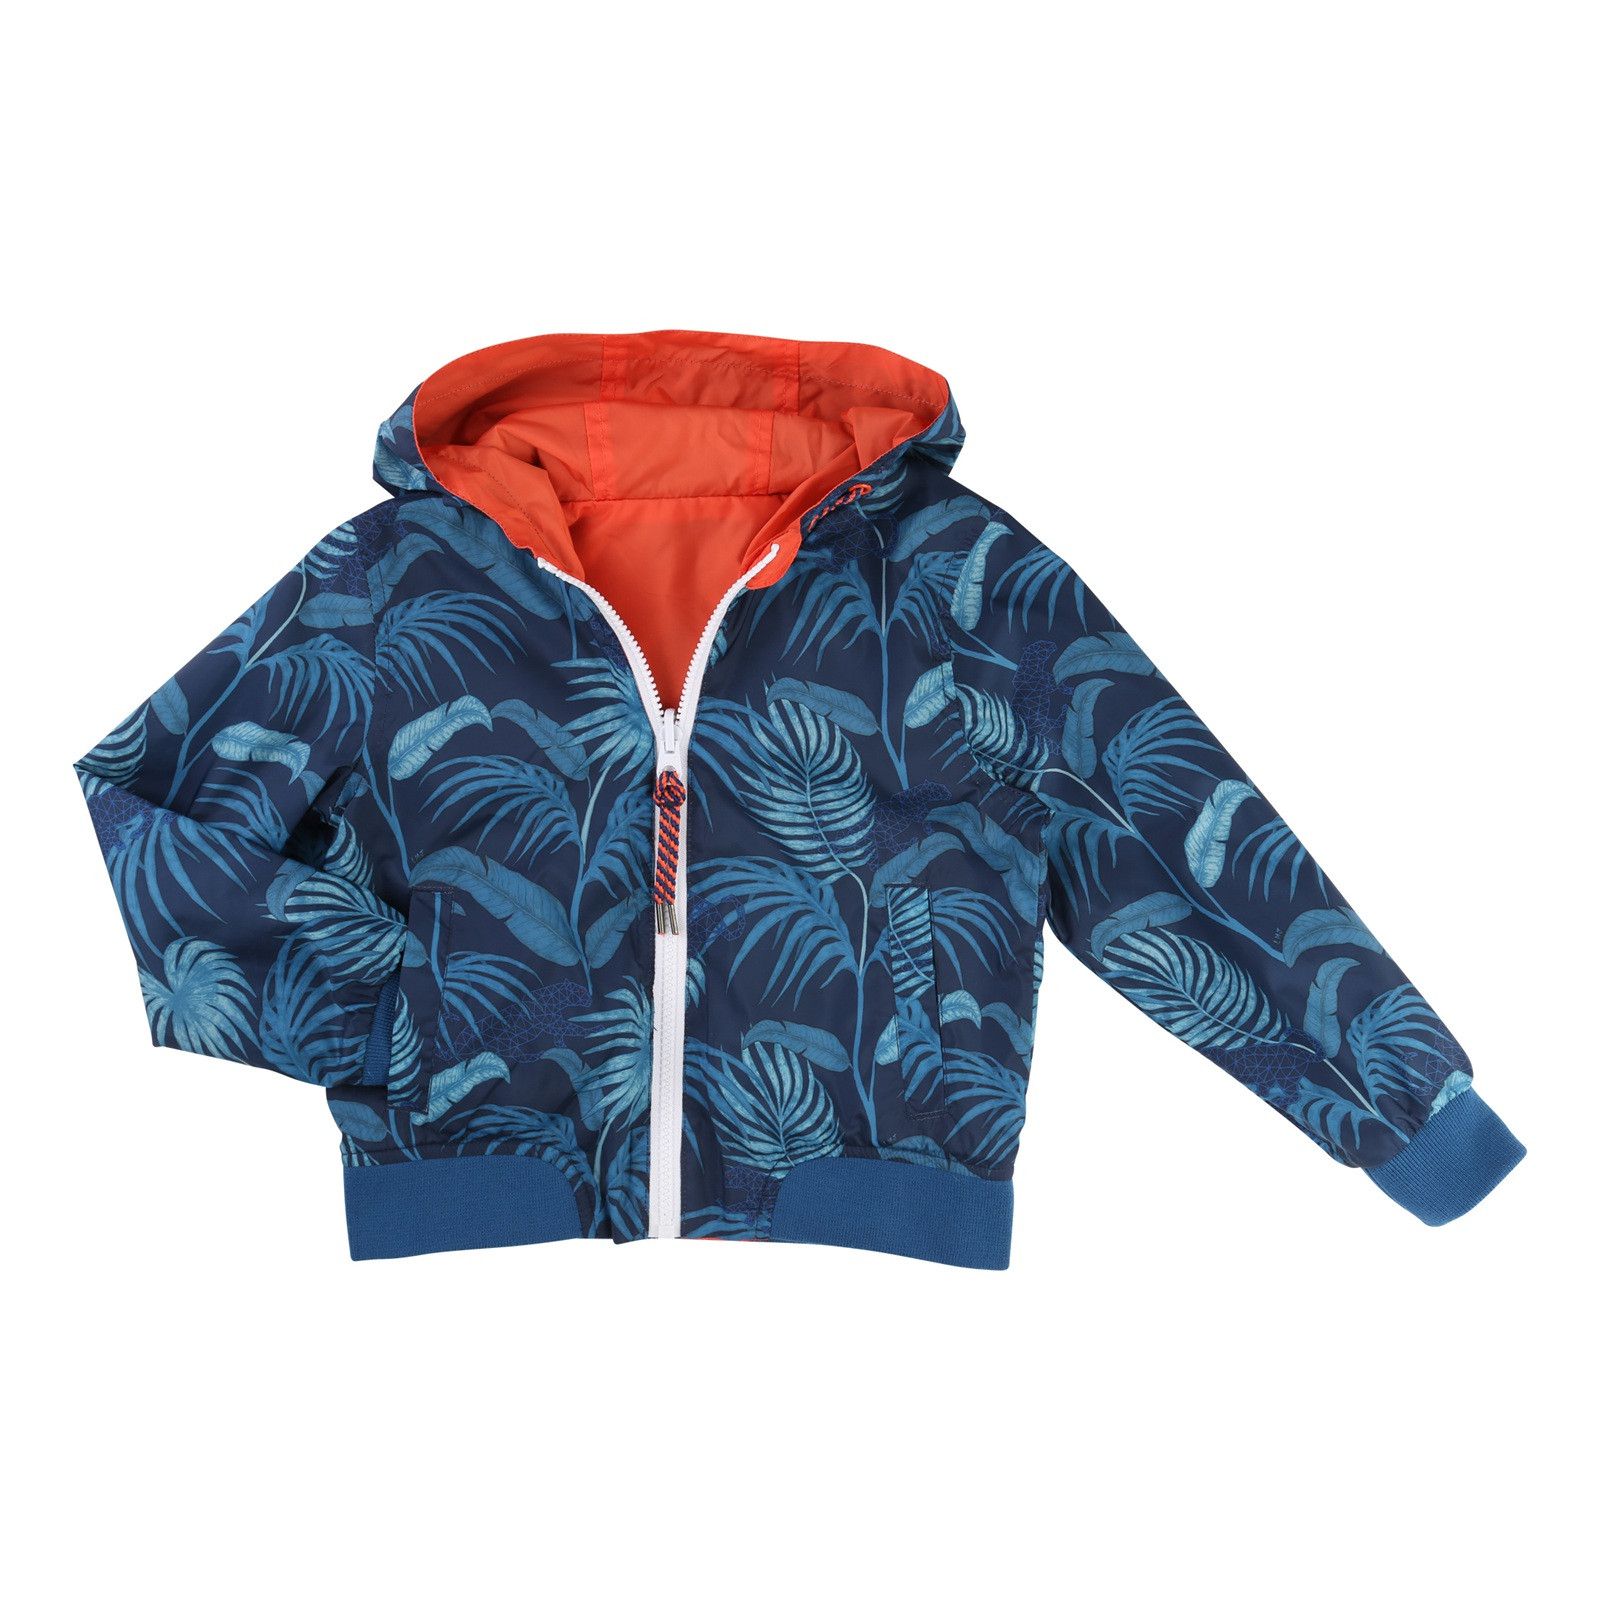 Boys Red&Blue Printed Reversibe Zip-up Hooded Jacket - CÉMAROSE | Children's Fashion Store - 2